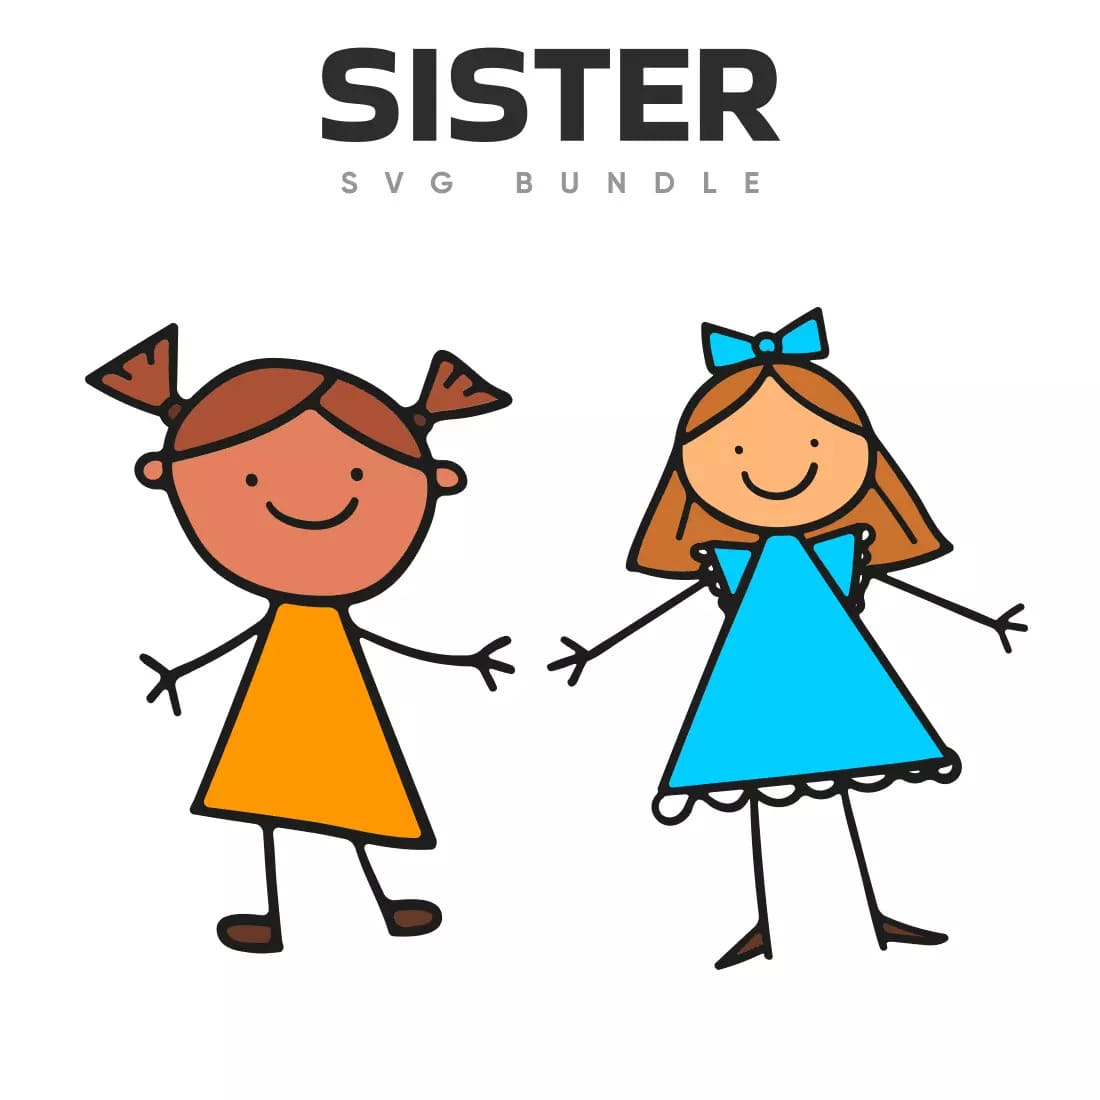 Sister SVG Bundle Preview 5.